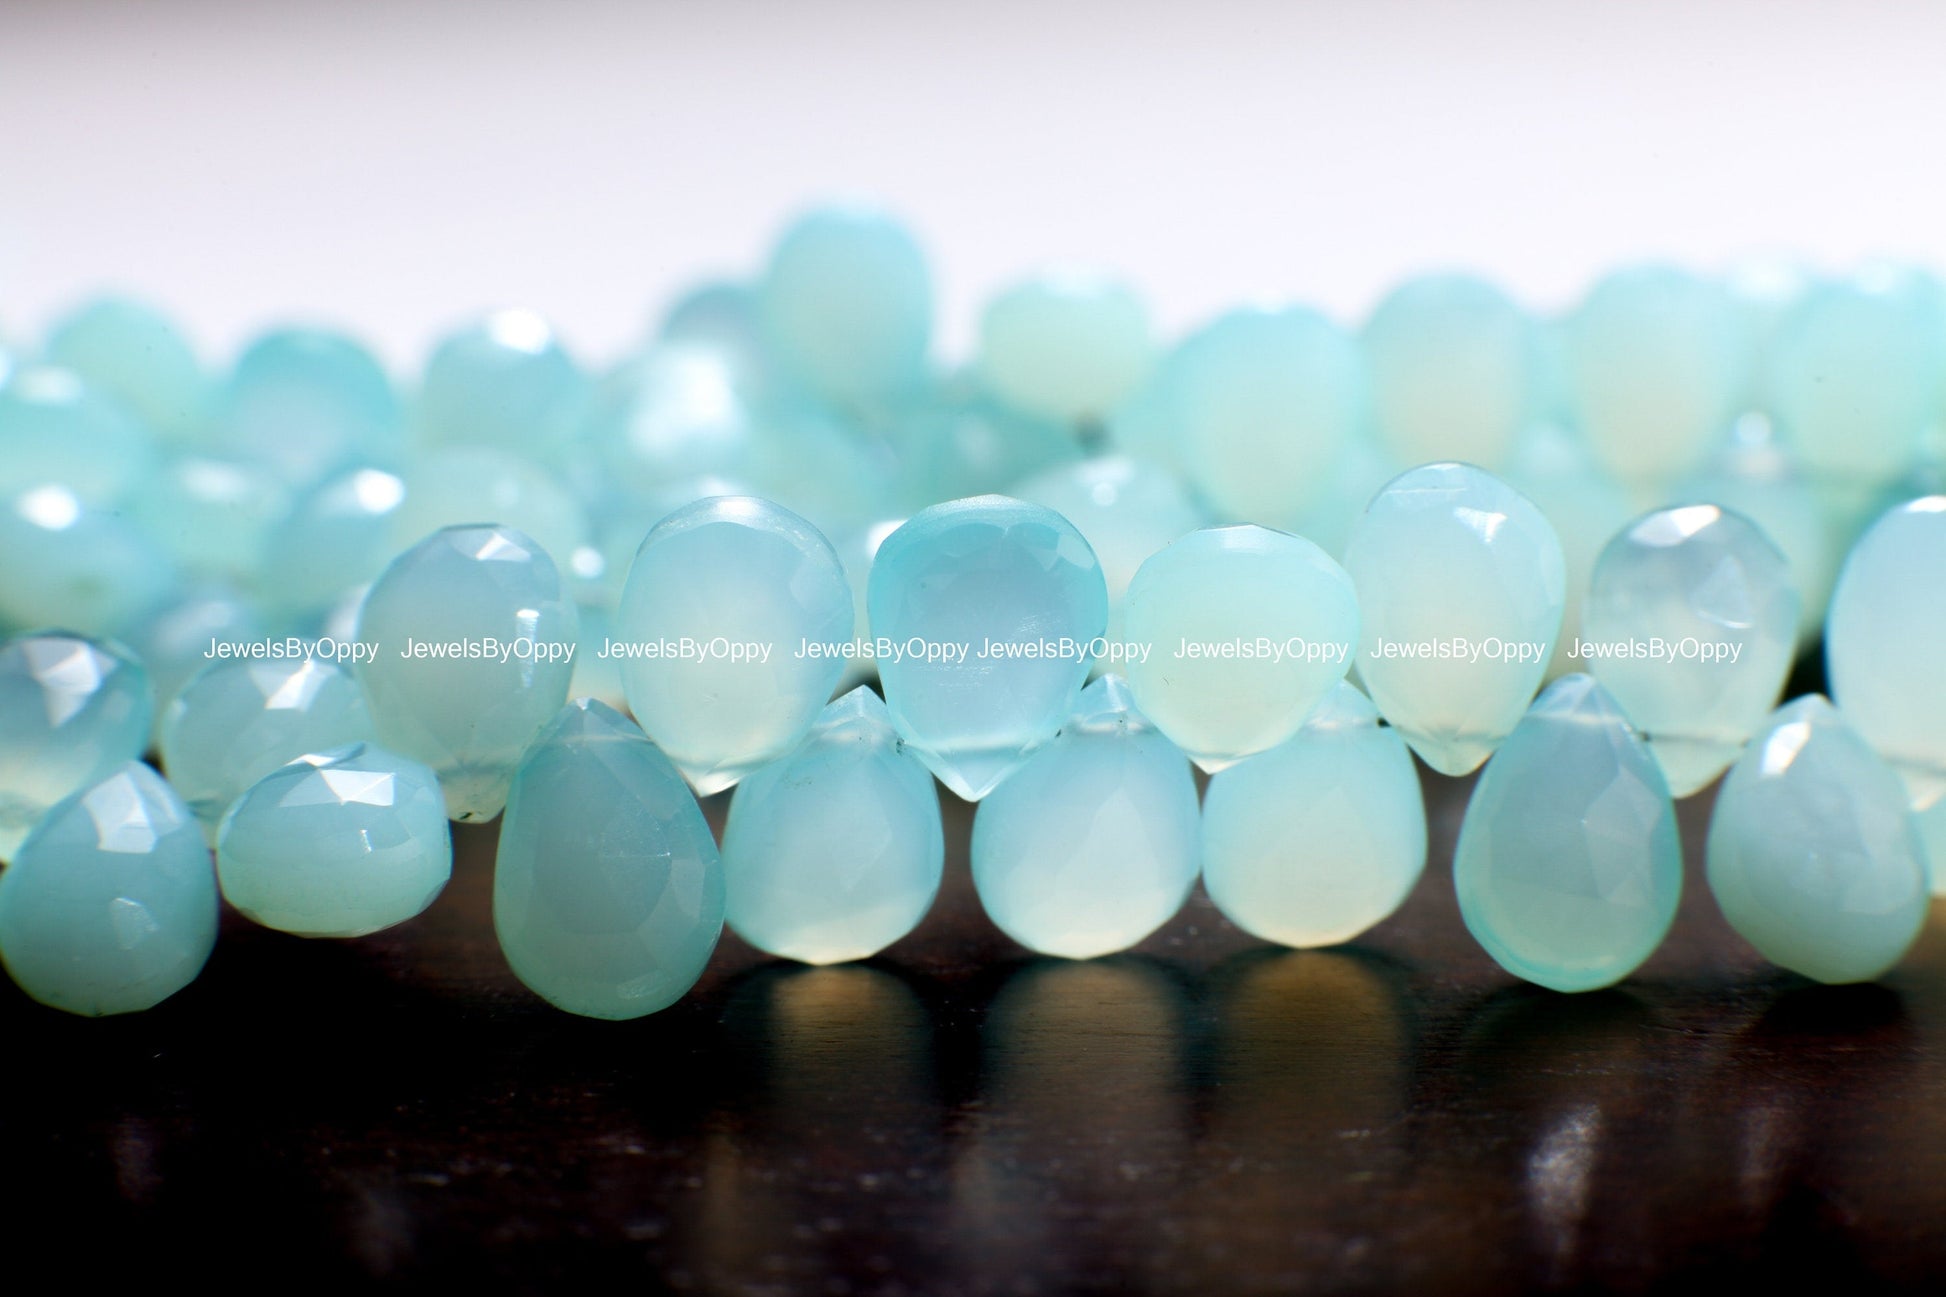 Aqua Blue Chalcedony Briolette Faceted 9x11-9x13mm Pear Drop Jewelry Making Gemstone Teardrop 10/20/40 Pcs